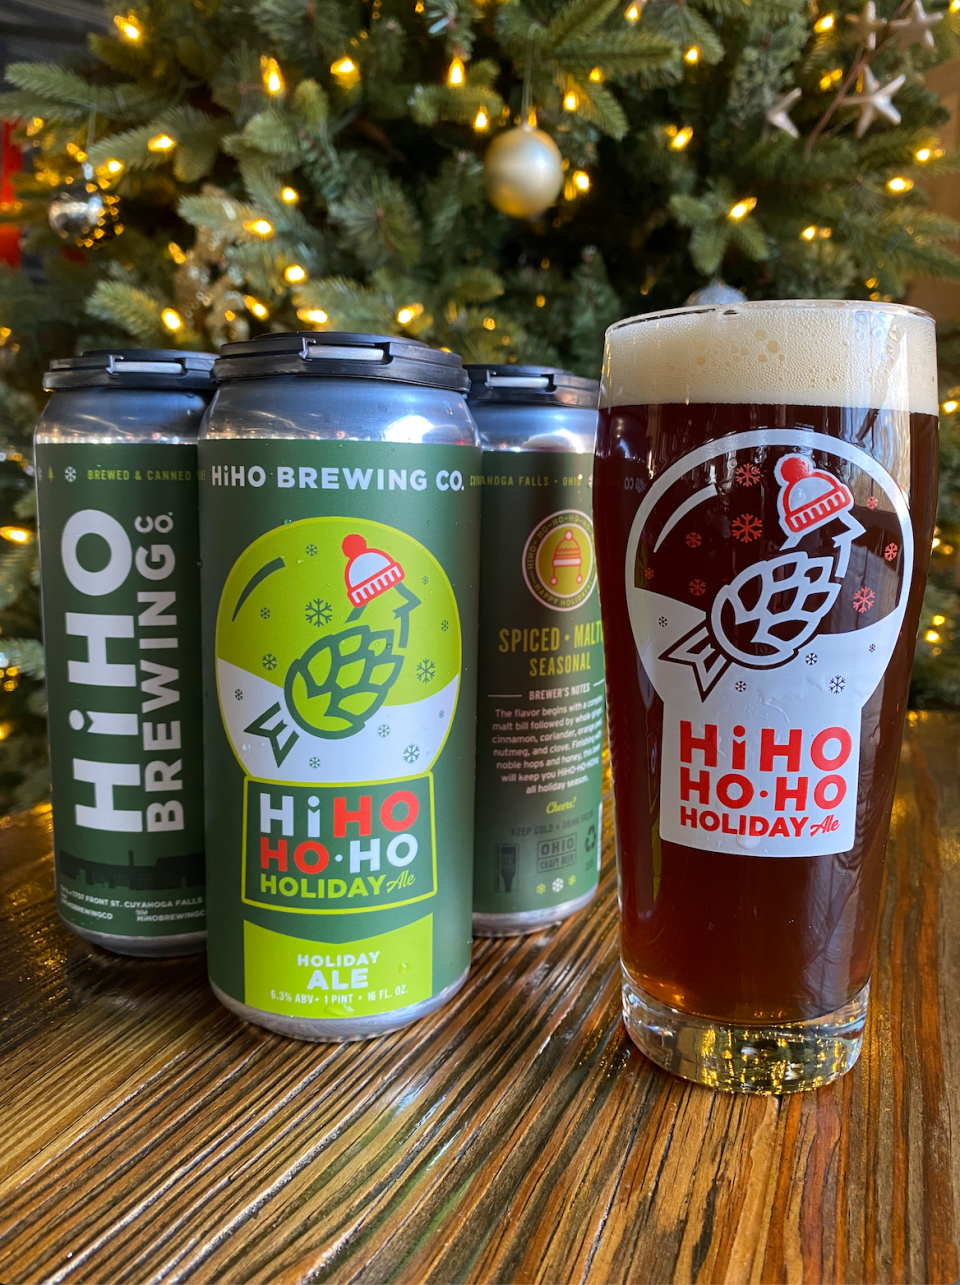 HiHO HO HO Holiday Ale